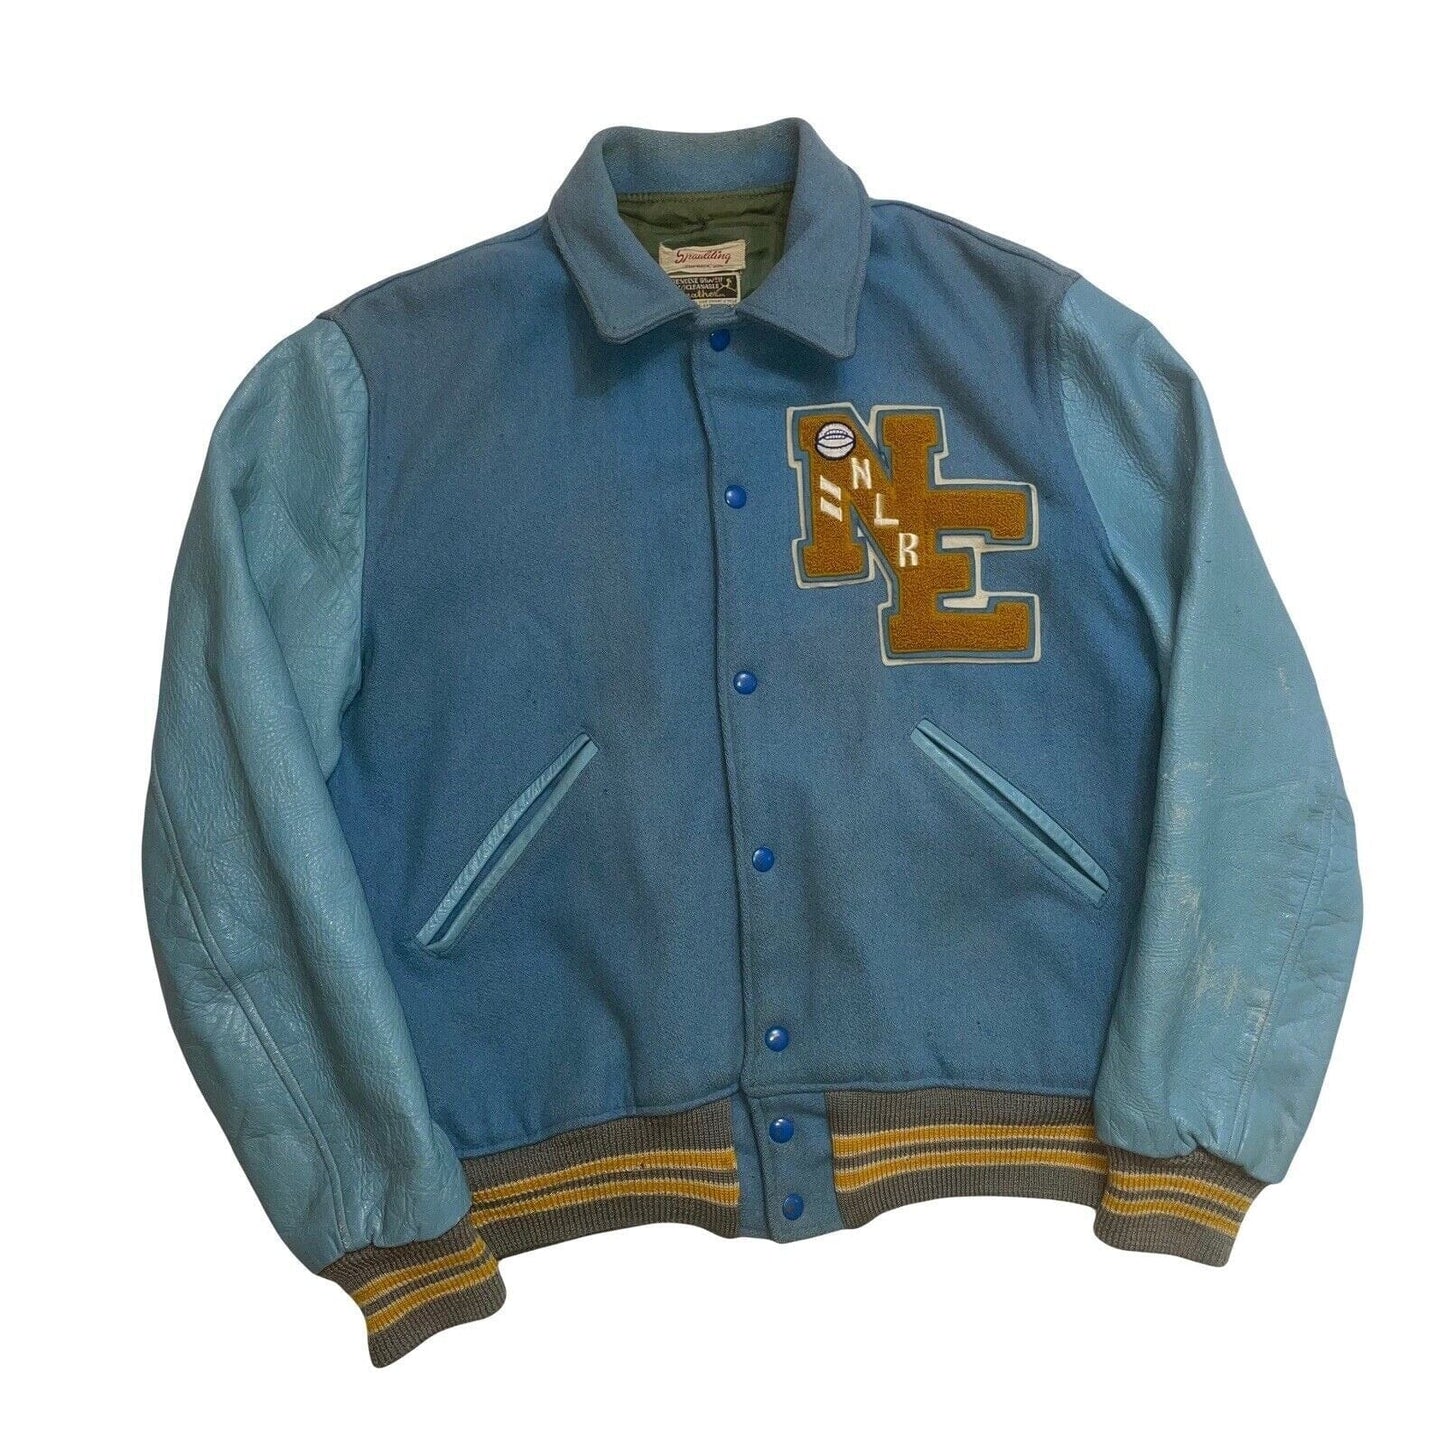 1960s 1970s Baby Blue NLR Varsity Letterman Jacket